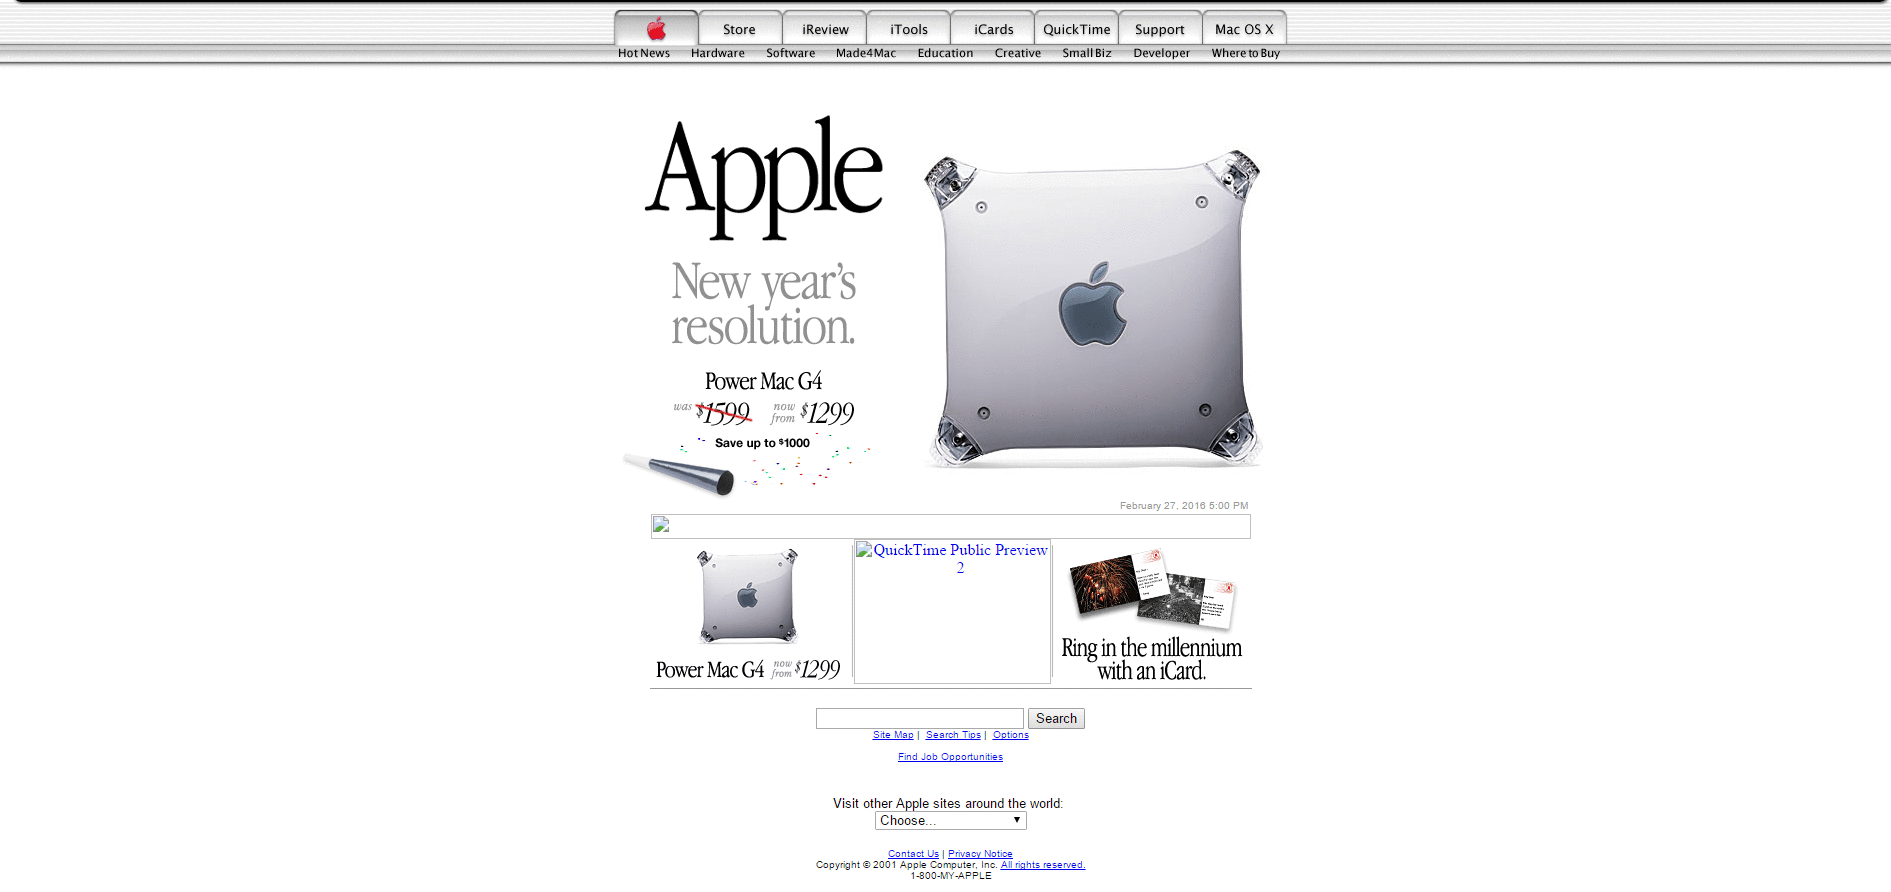 apple.com Website Design in 2001